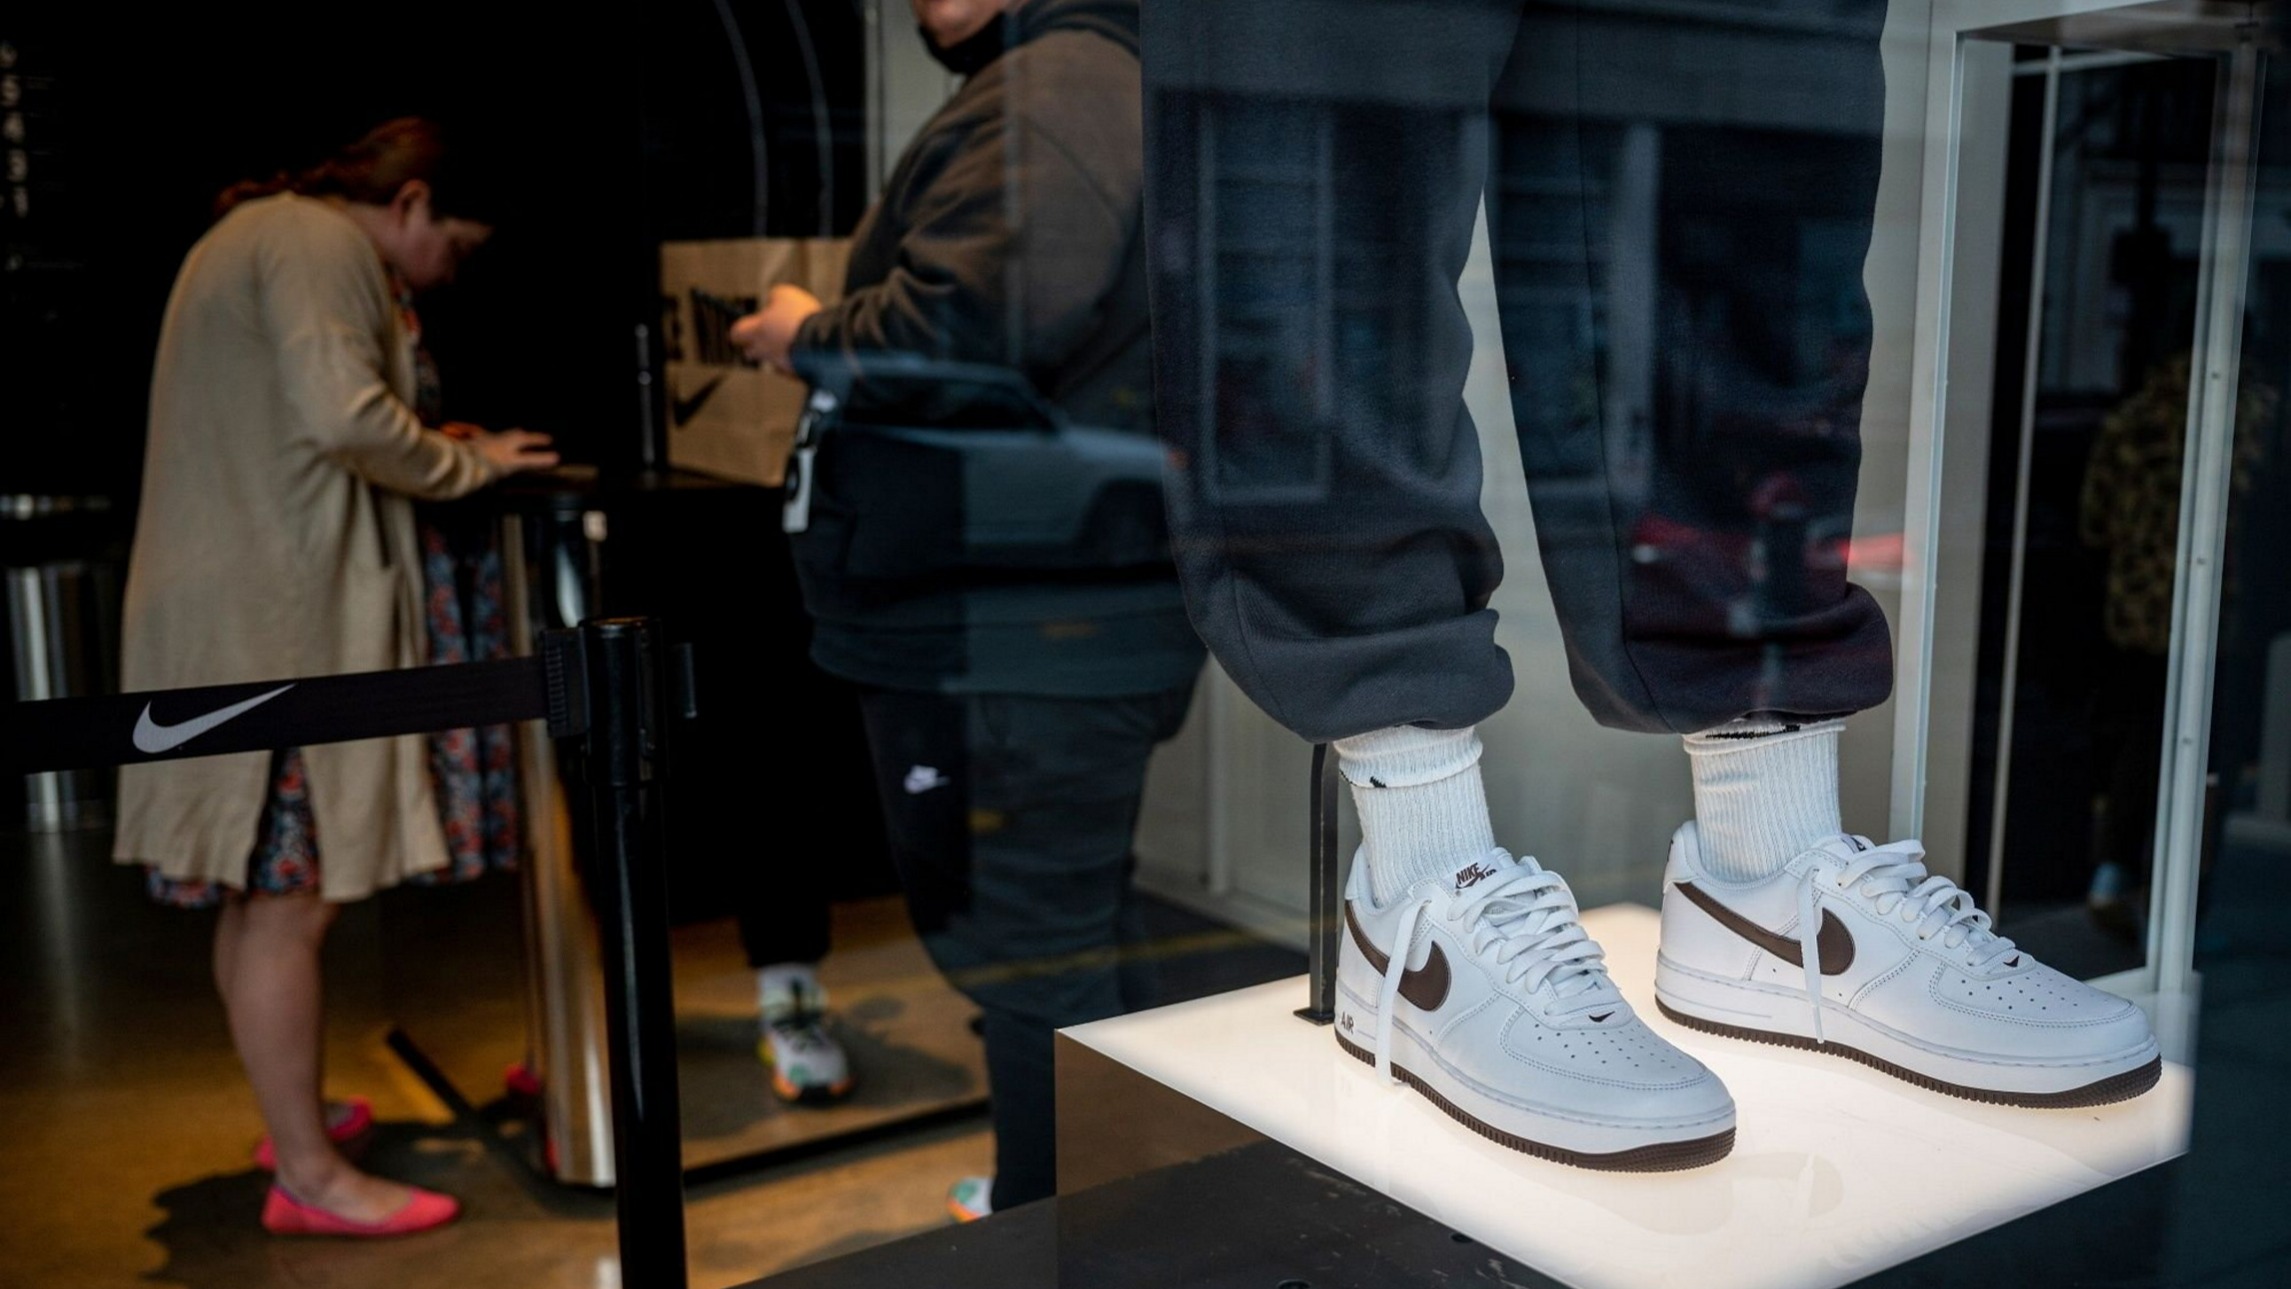 Daar jas Verlating Nike boosts global sportswear sector with upbeat forecast | Financial Times